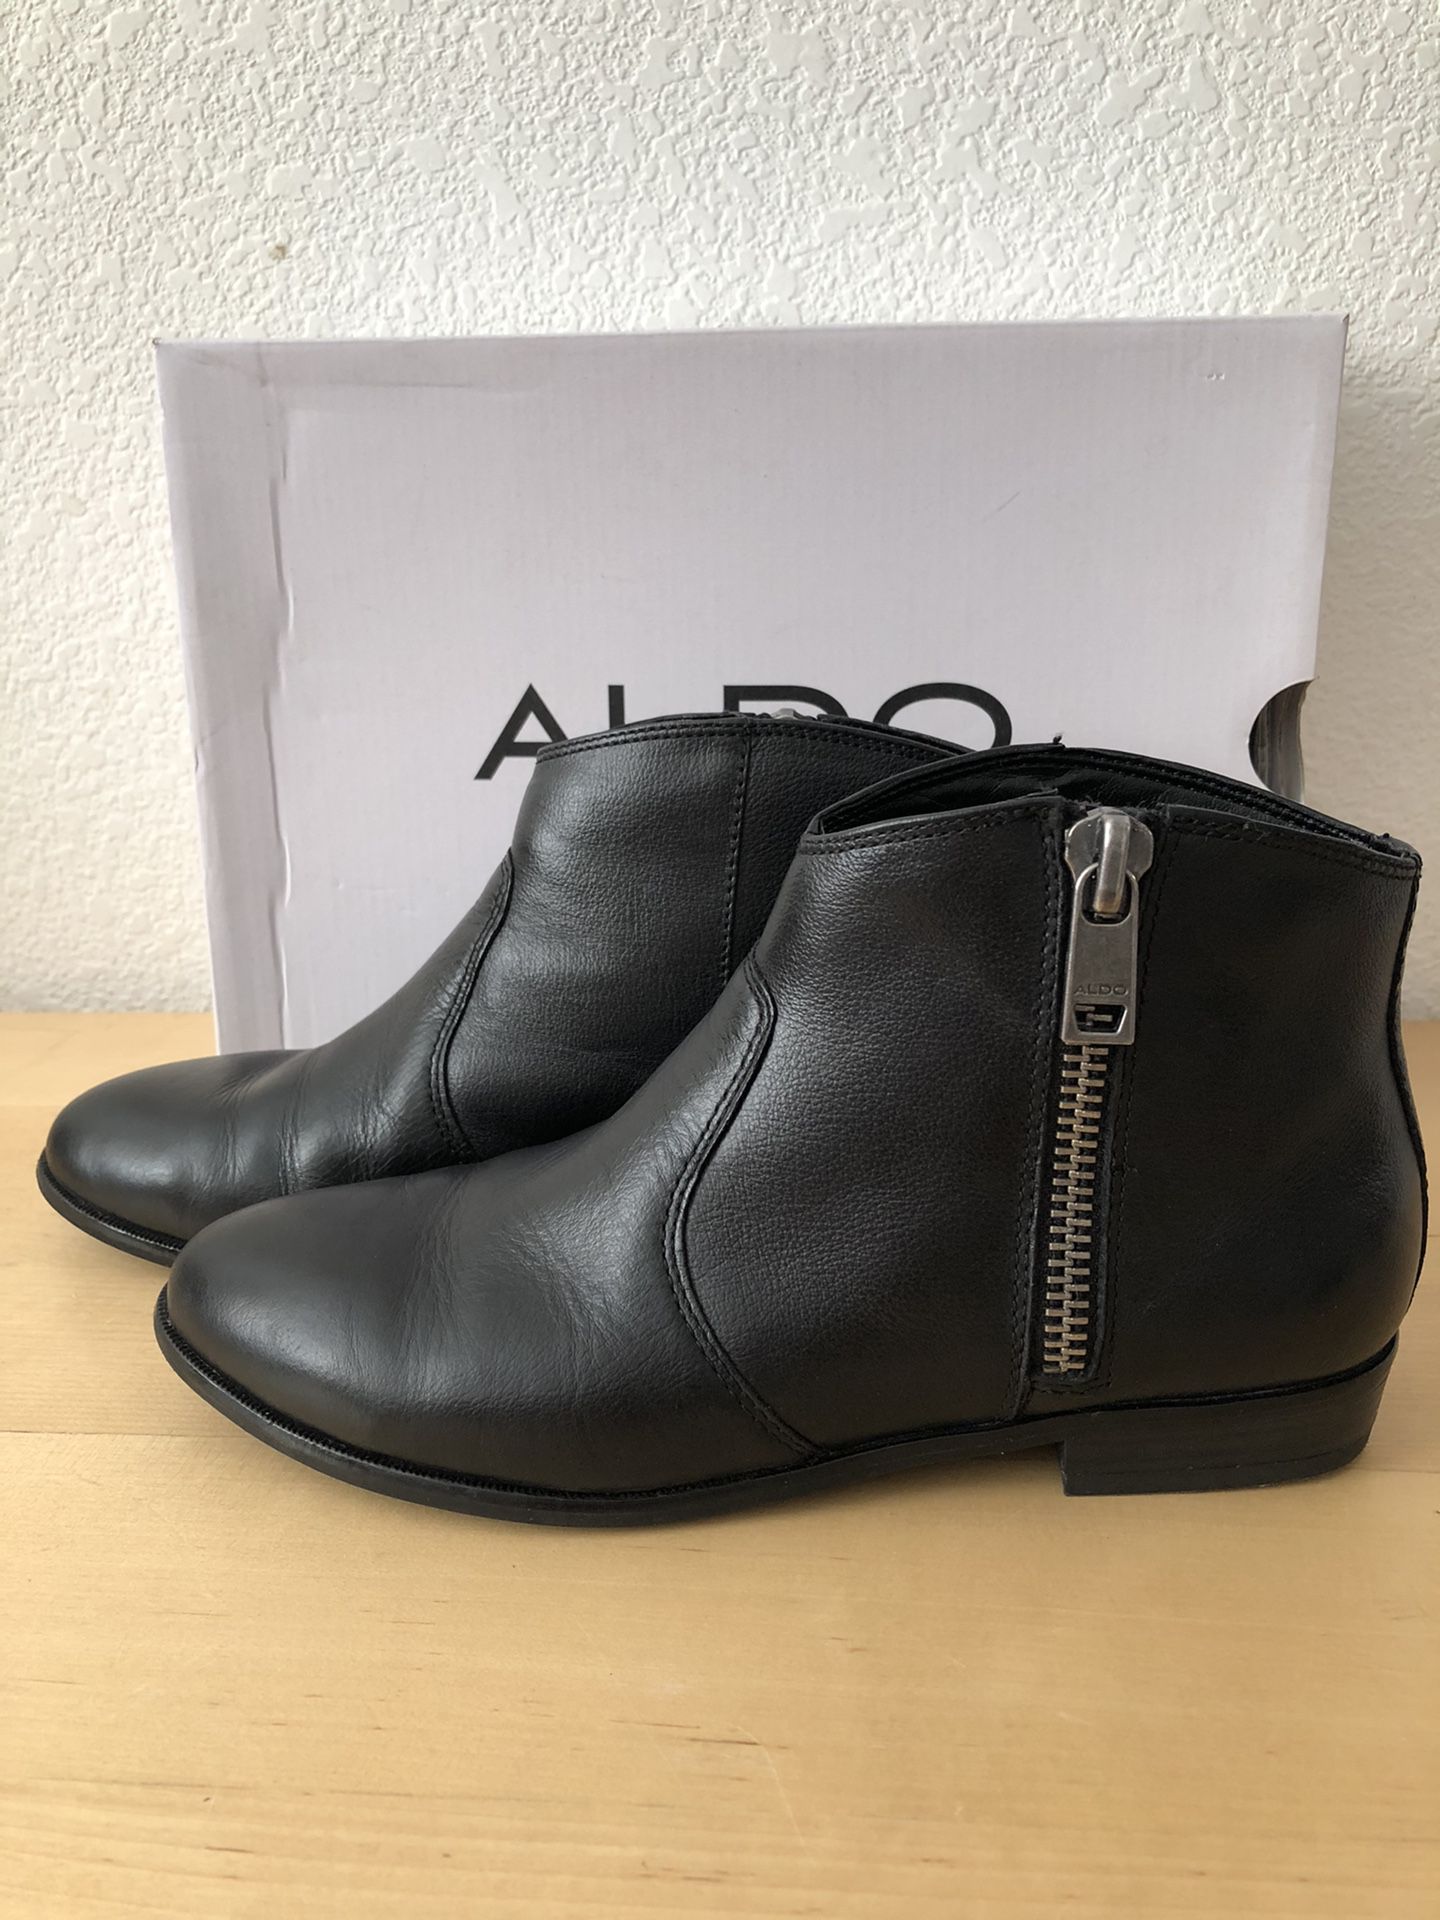 ALDO Leather Womens Mini Boots/ Black/ Size 7.5/ Original Retails $110.